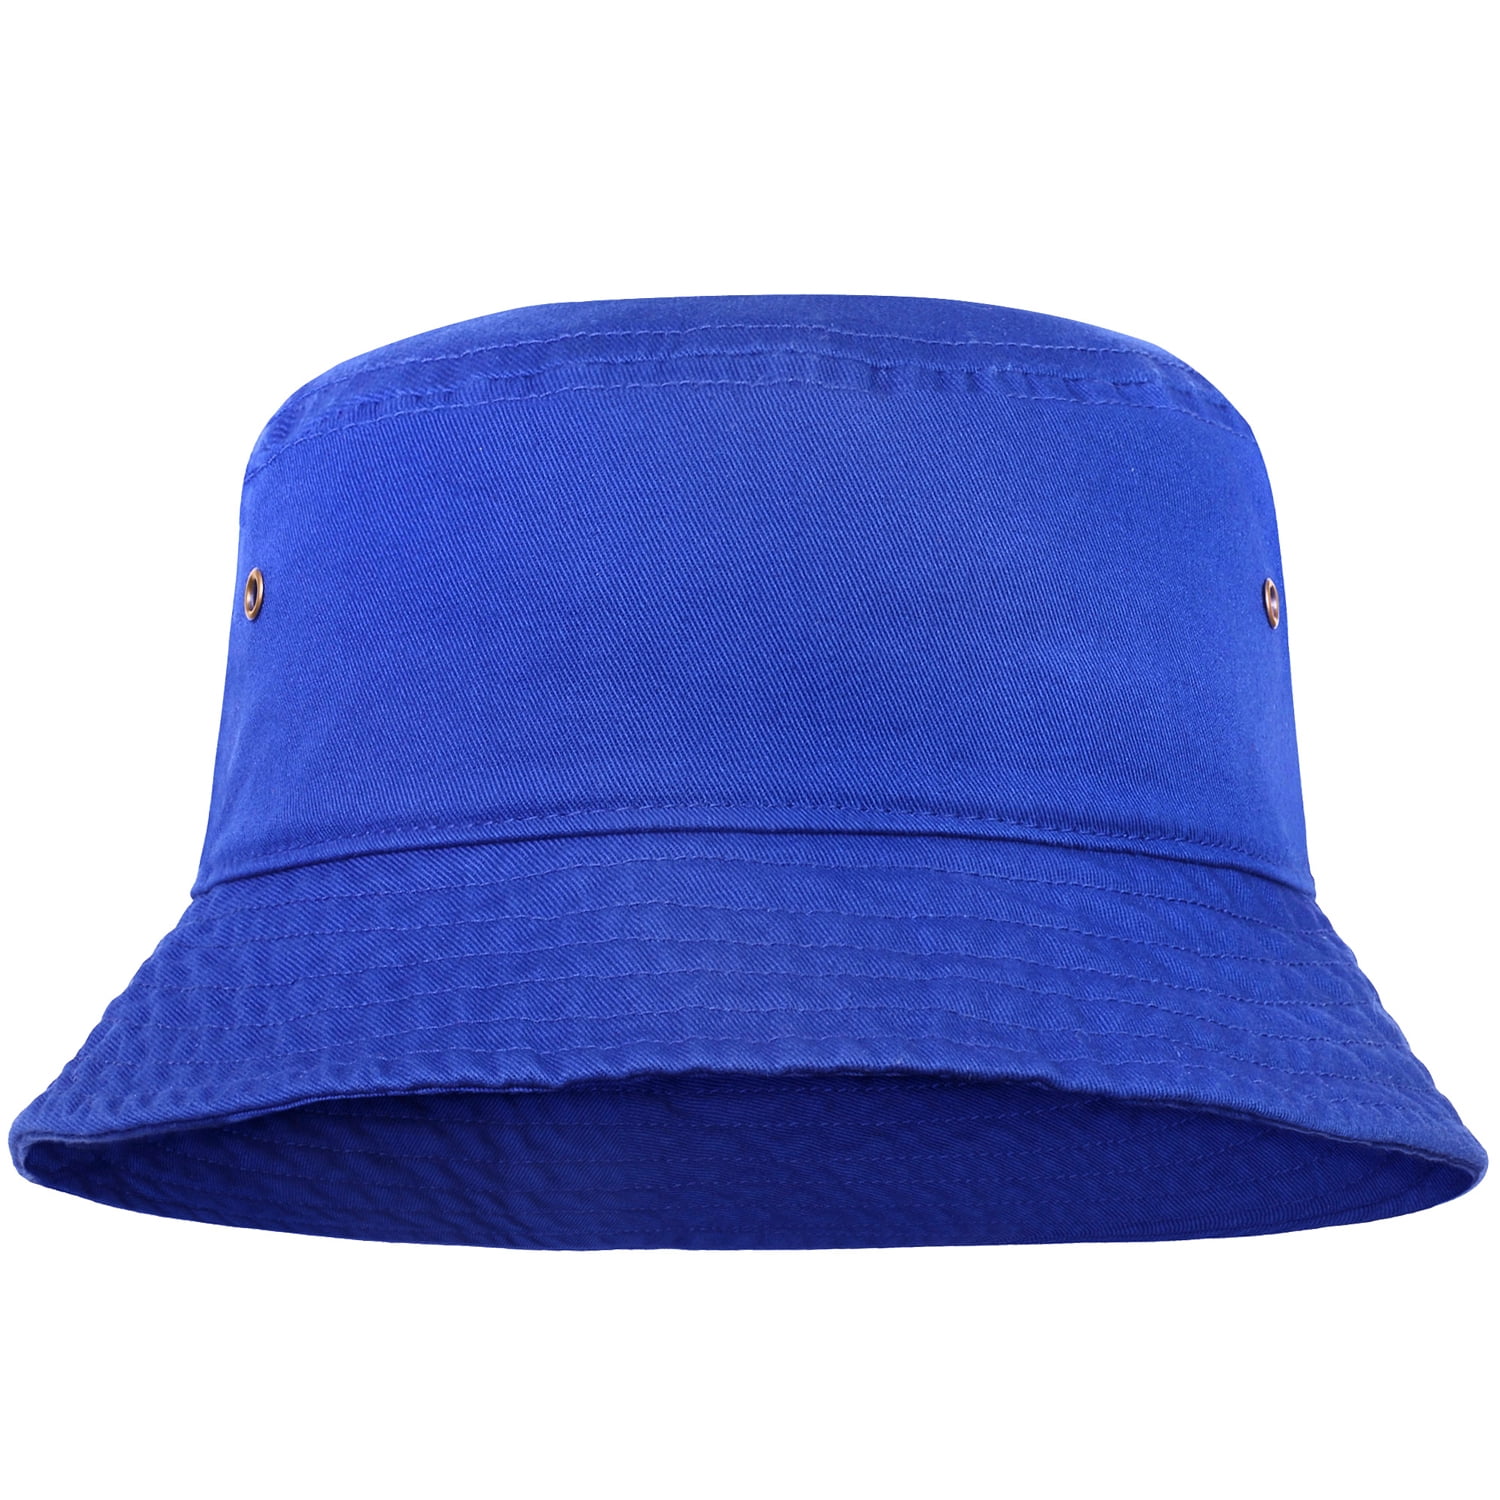 Footballer HOOLIGANS Bucket Hats Cool LL COPS ULTRAS FANS 1.3.1.2. CURVE  SUD NORD New nigikala Fisherman Caps Fishing Hat MZ-334